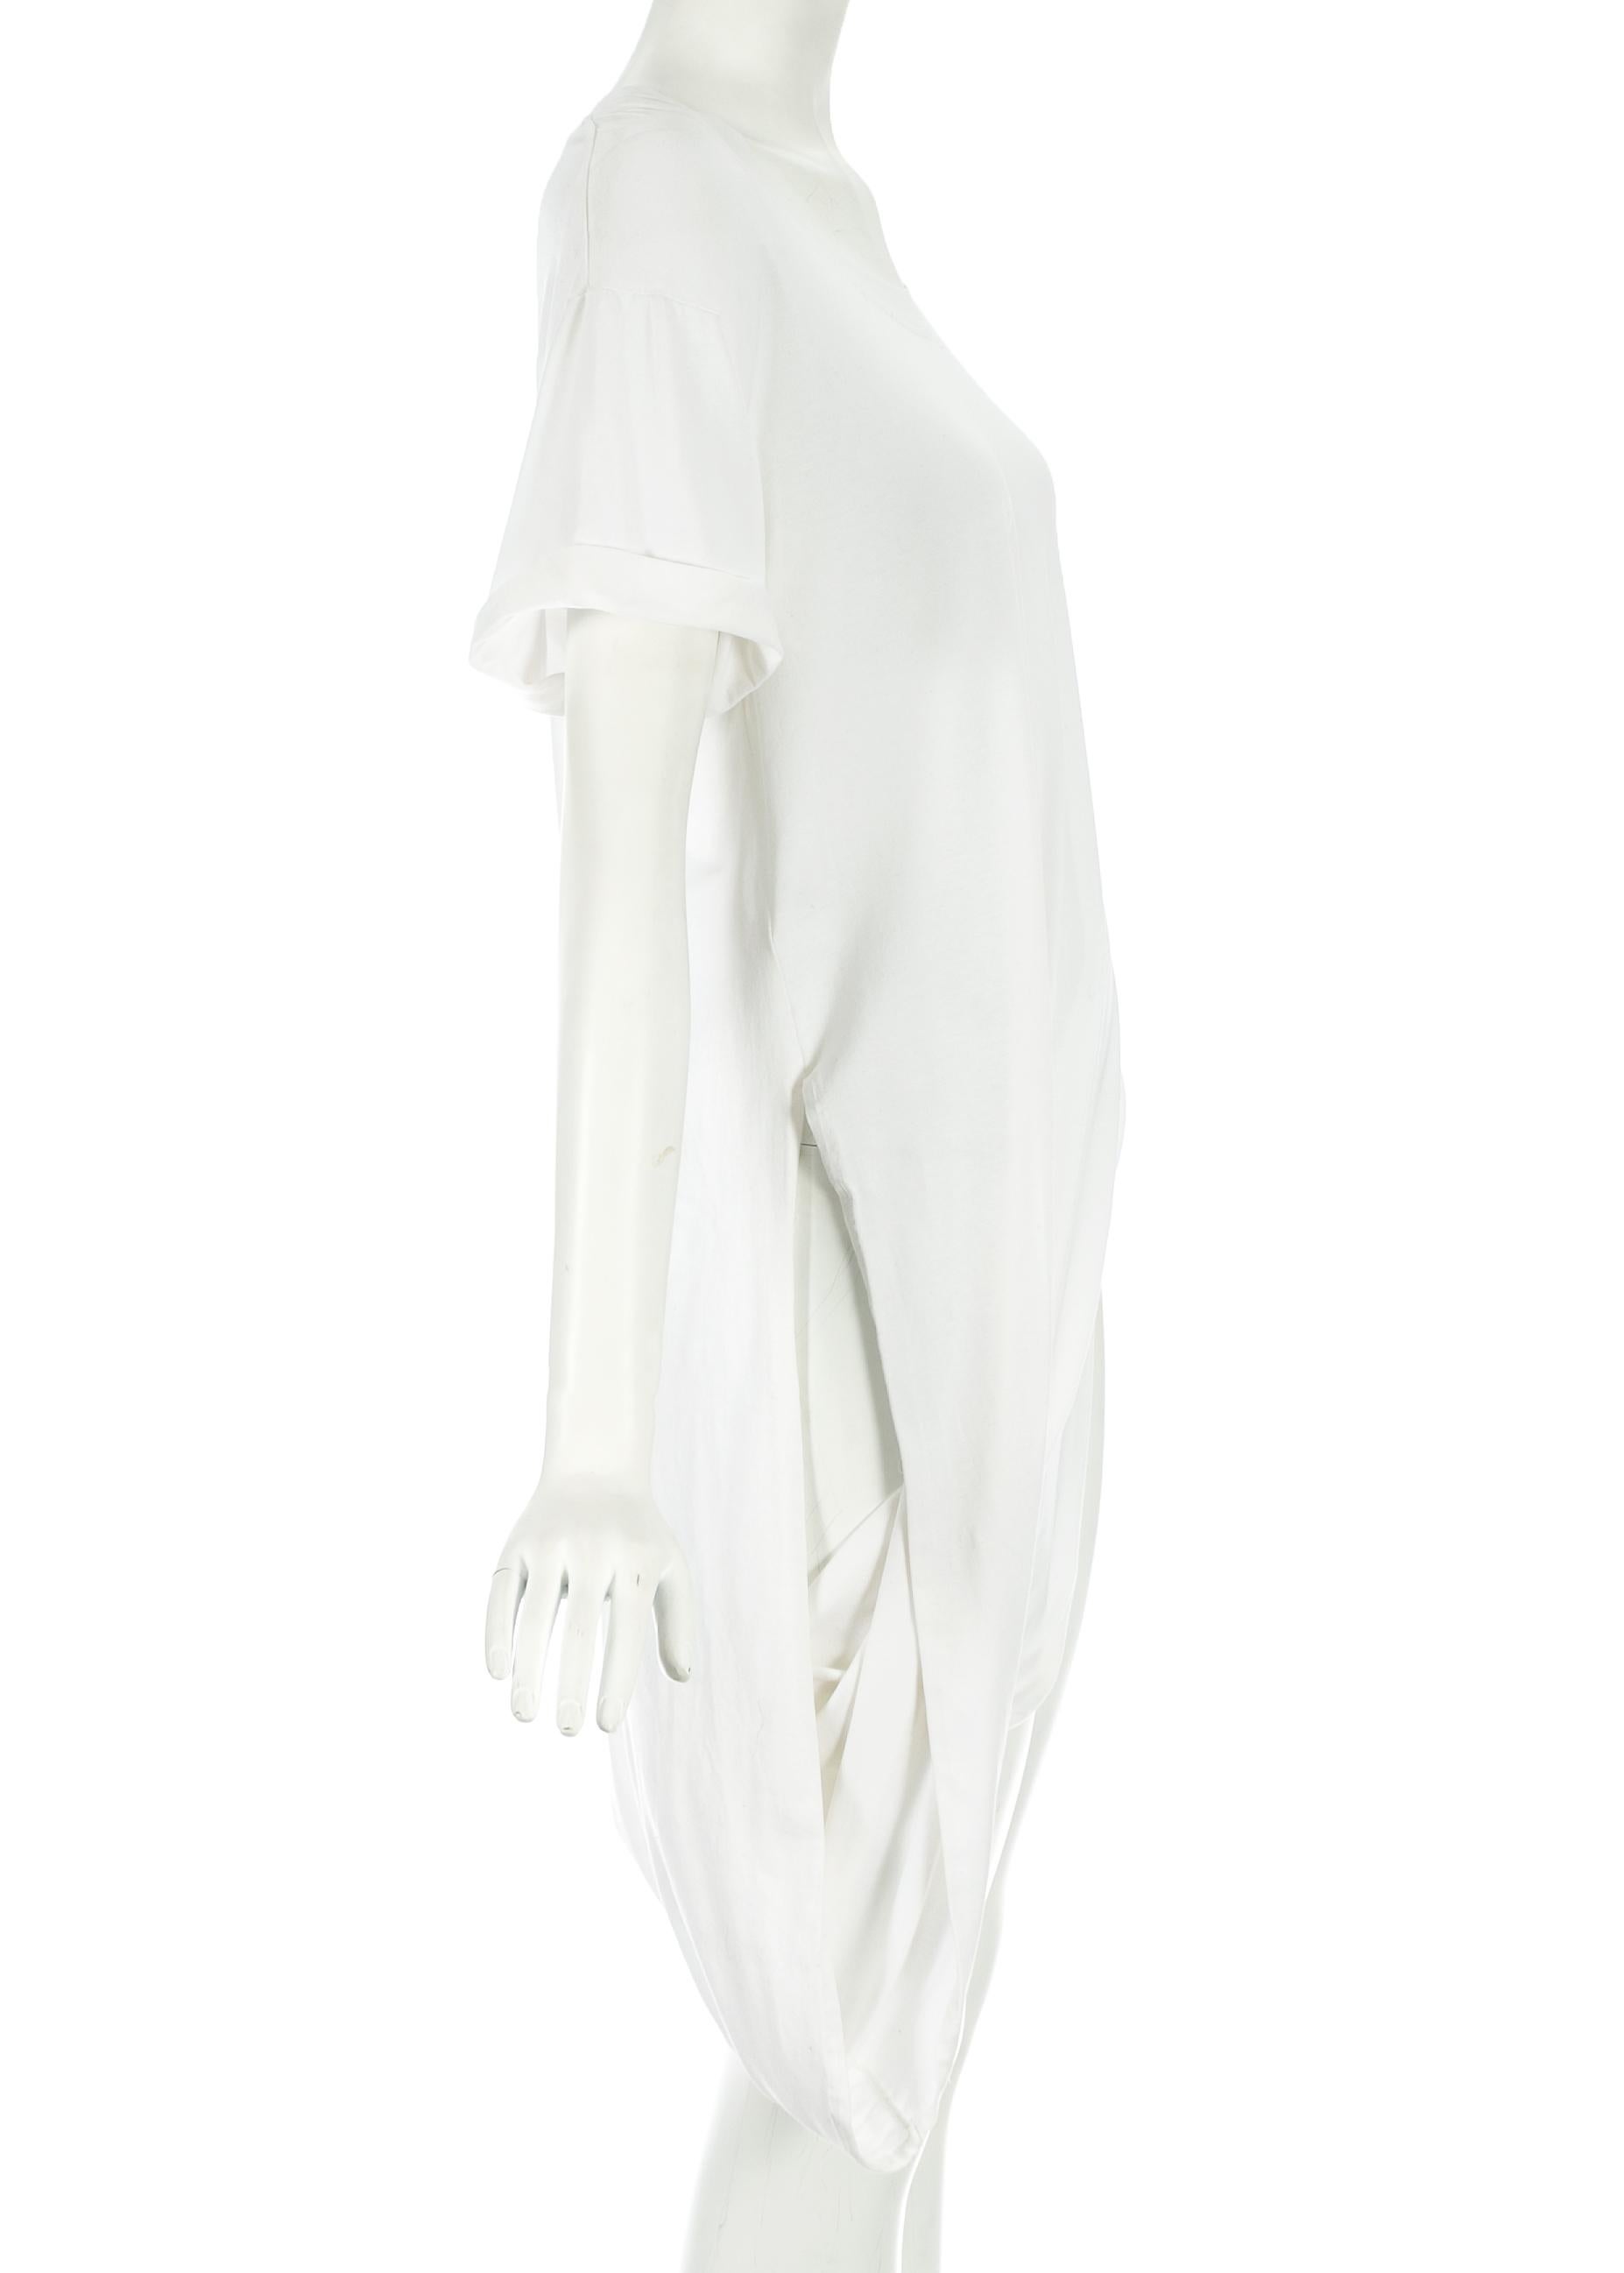 Gray Margiela white cotton draped t-shirt, c. 2000s